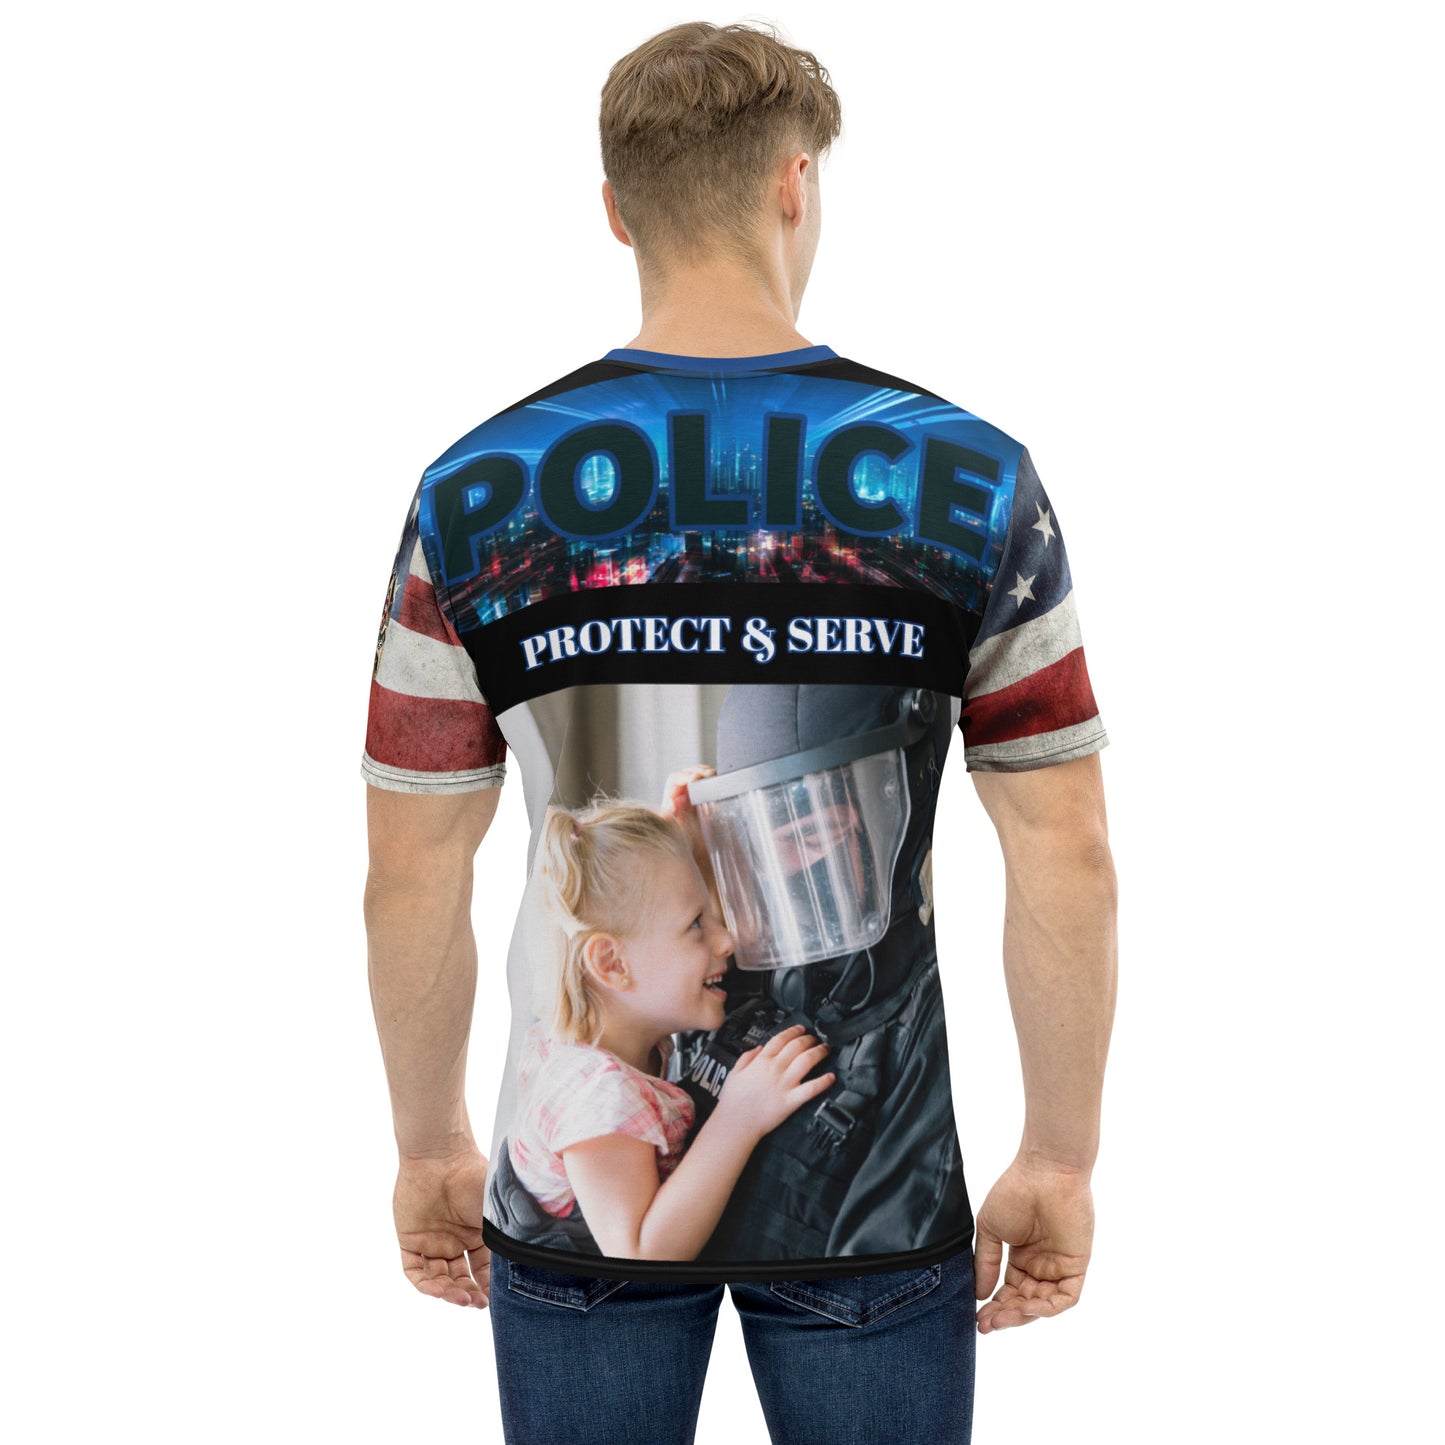 Protect & Serve Men's t-shirt